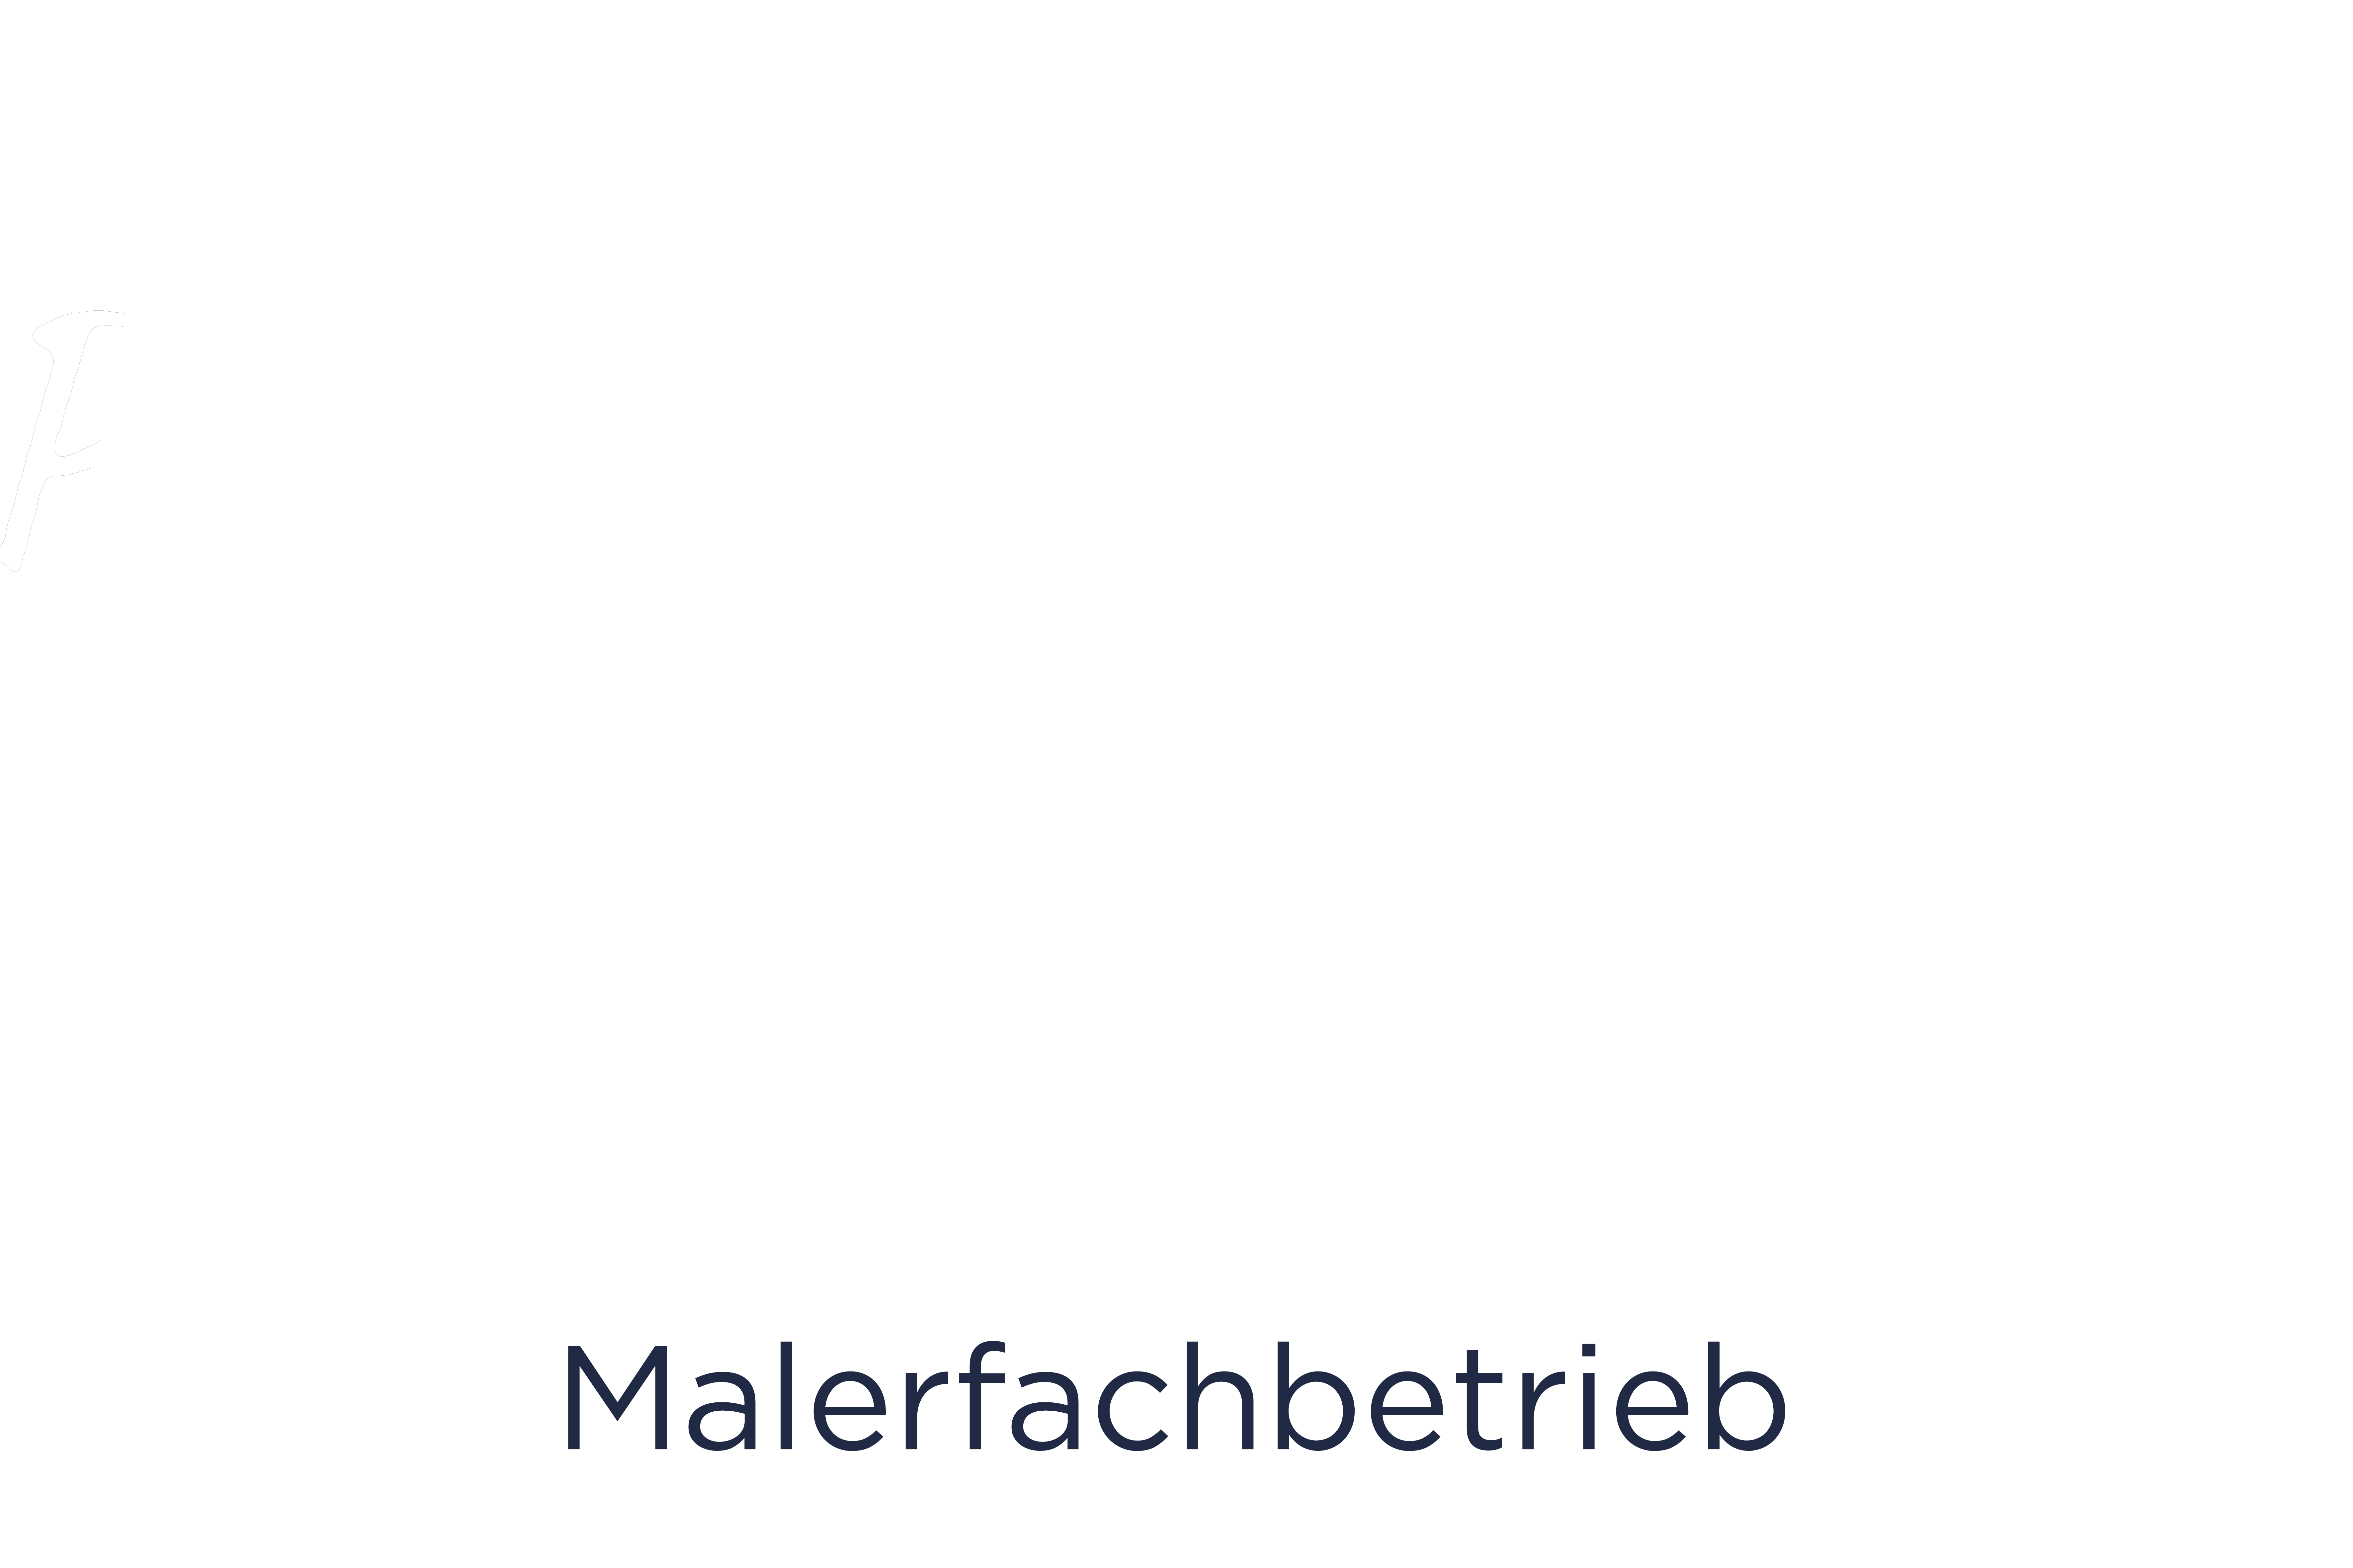 Power-Paint Malerbetrieb